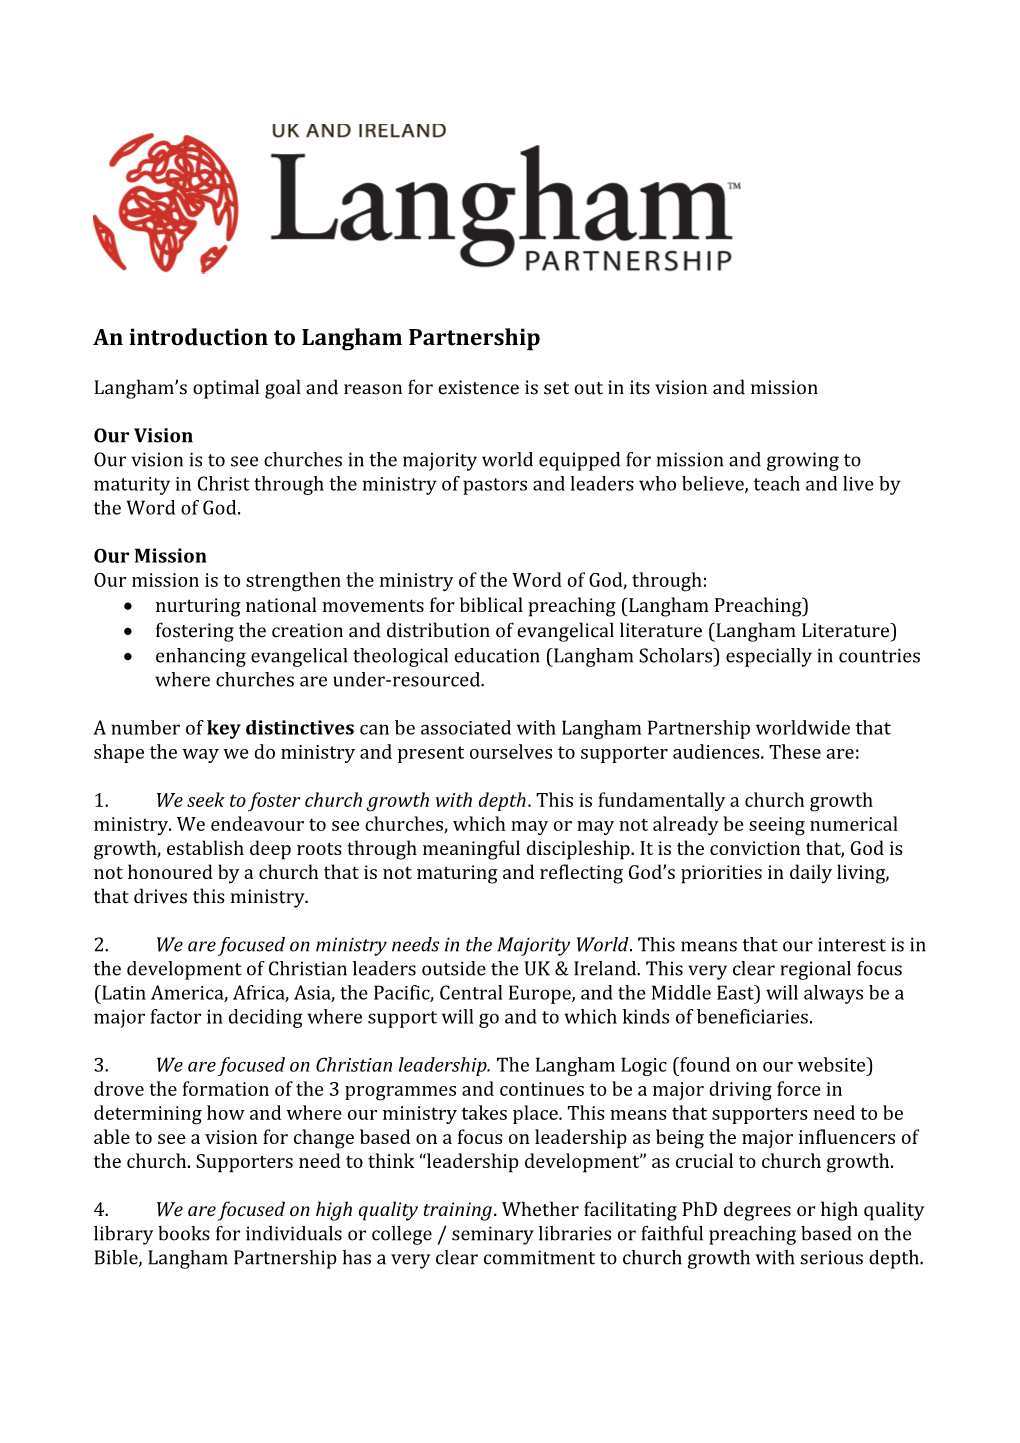 An Introduction to Langham Partnership